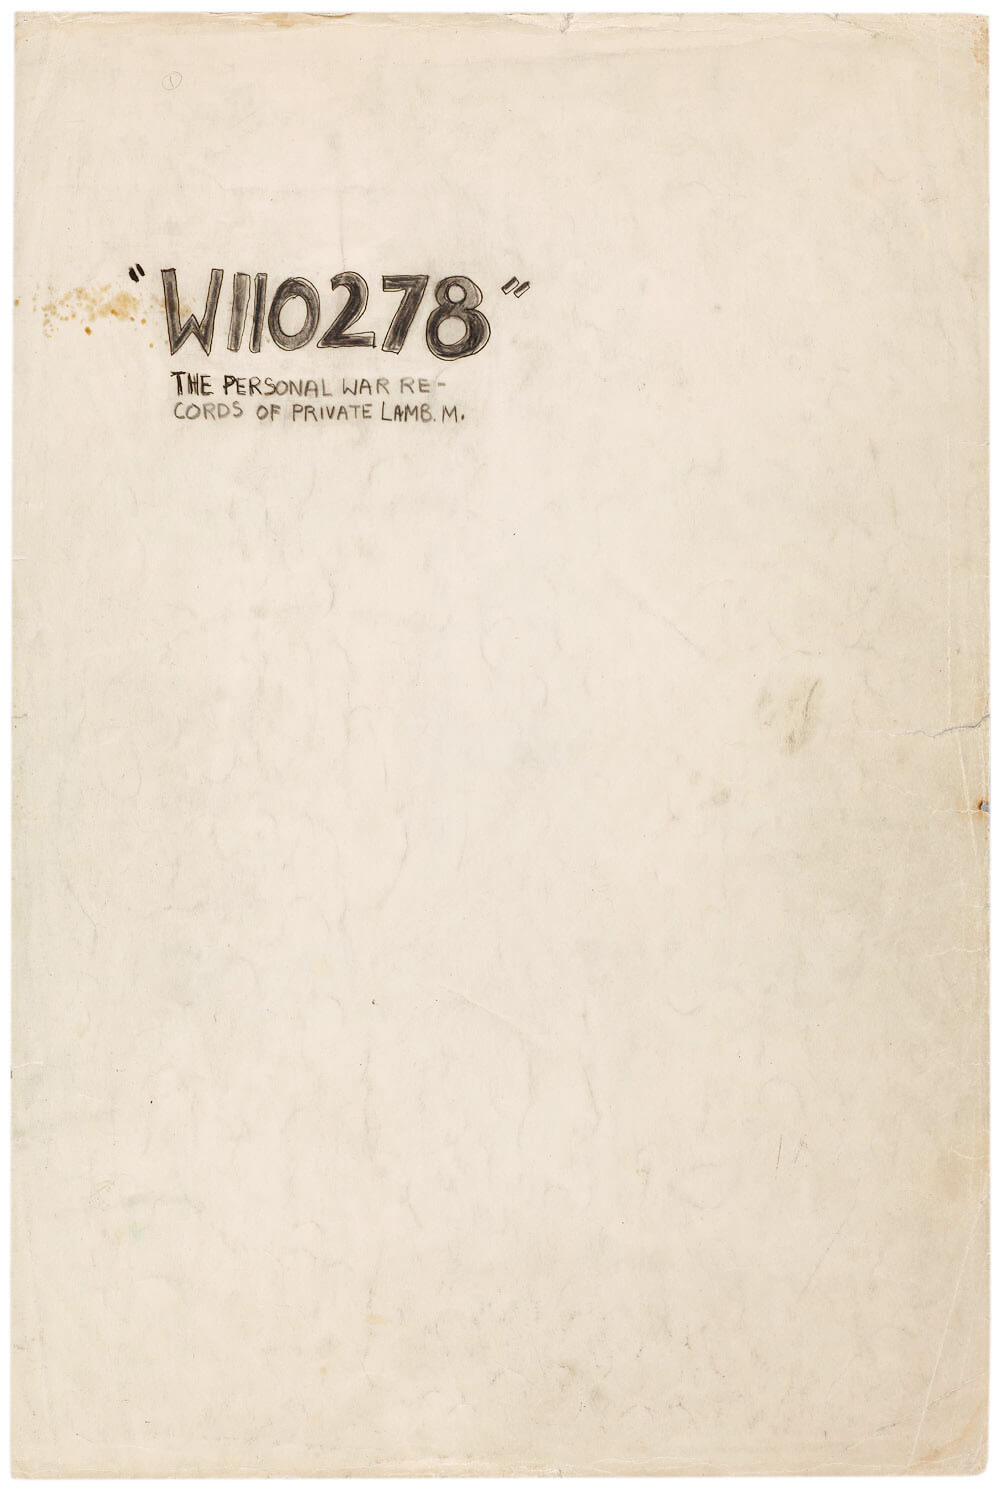 Molly Lamb Bobak, W110278: The Personal War Records of Private Lamb, M.